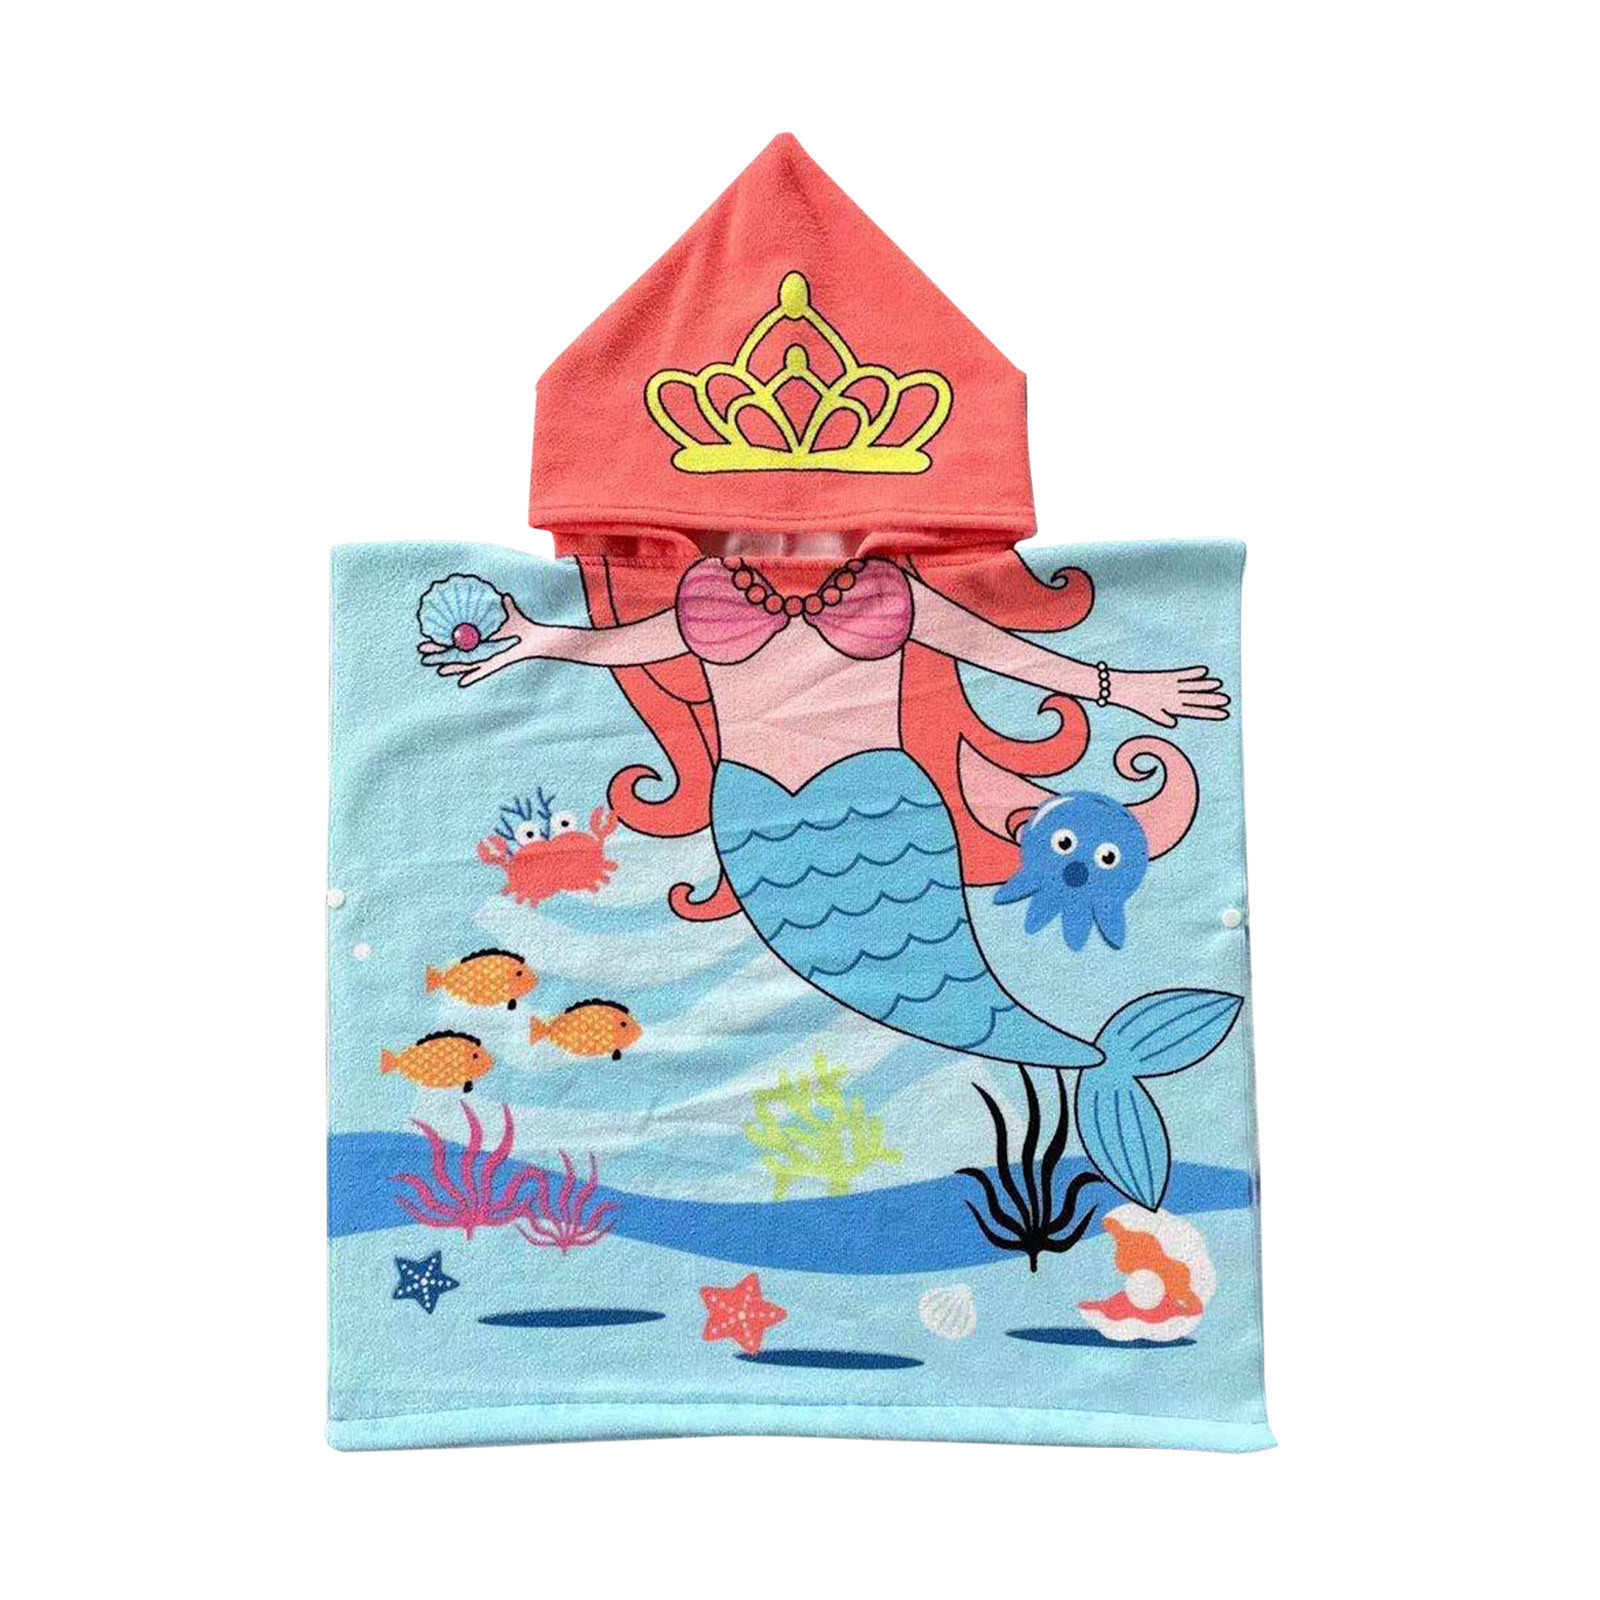 Uheoun Home Textiles,Children's Bath Towel Cape Children's Hooded Bathrobe  Cartoon Print Wearable Beach on Clearance